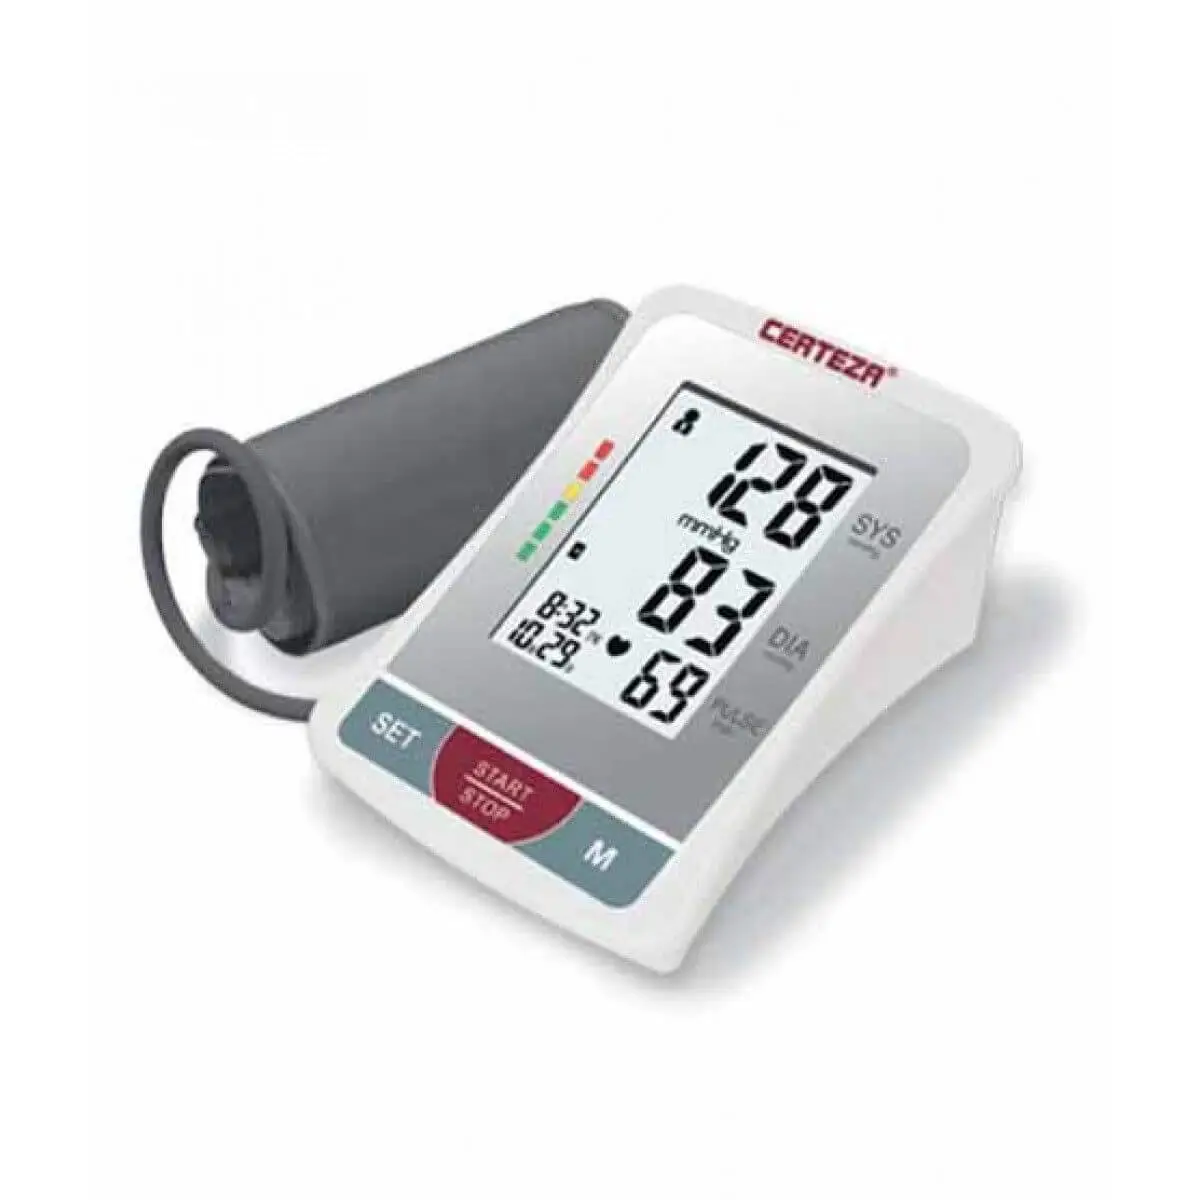 Buy-certeza-blood-pressure-monitor-bm-407-in-pakistan